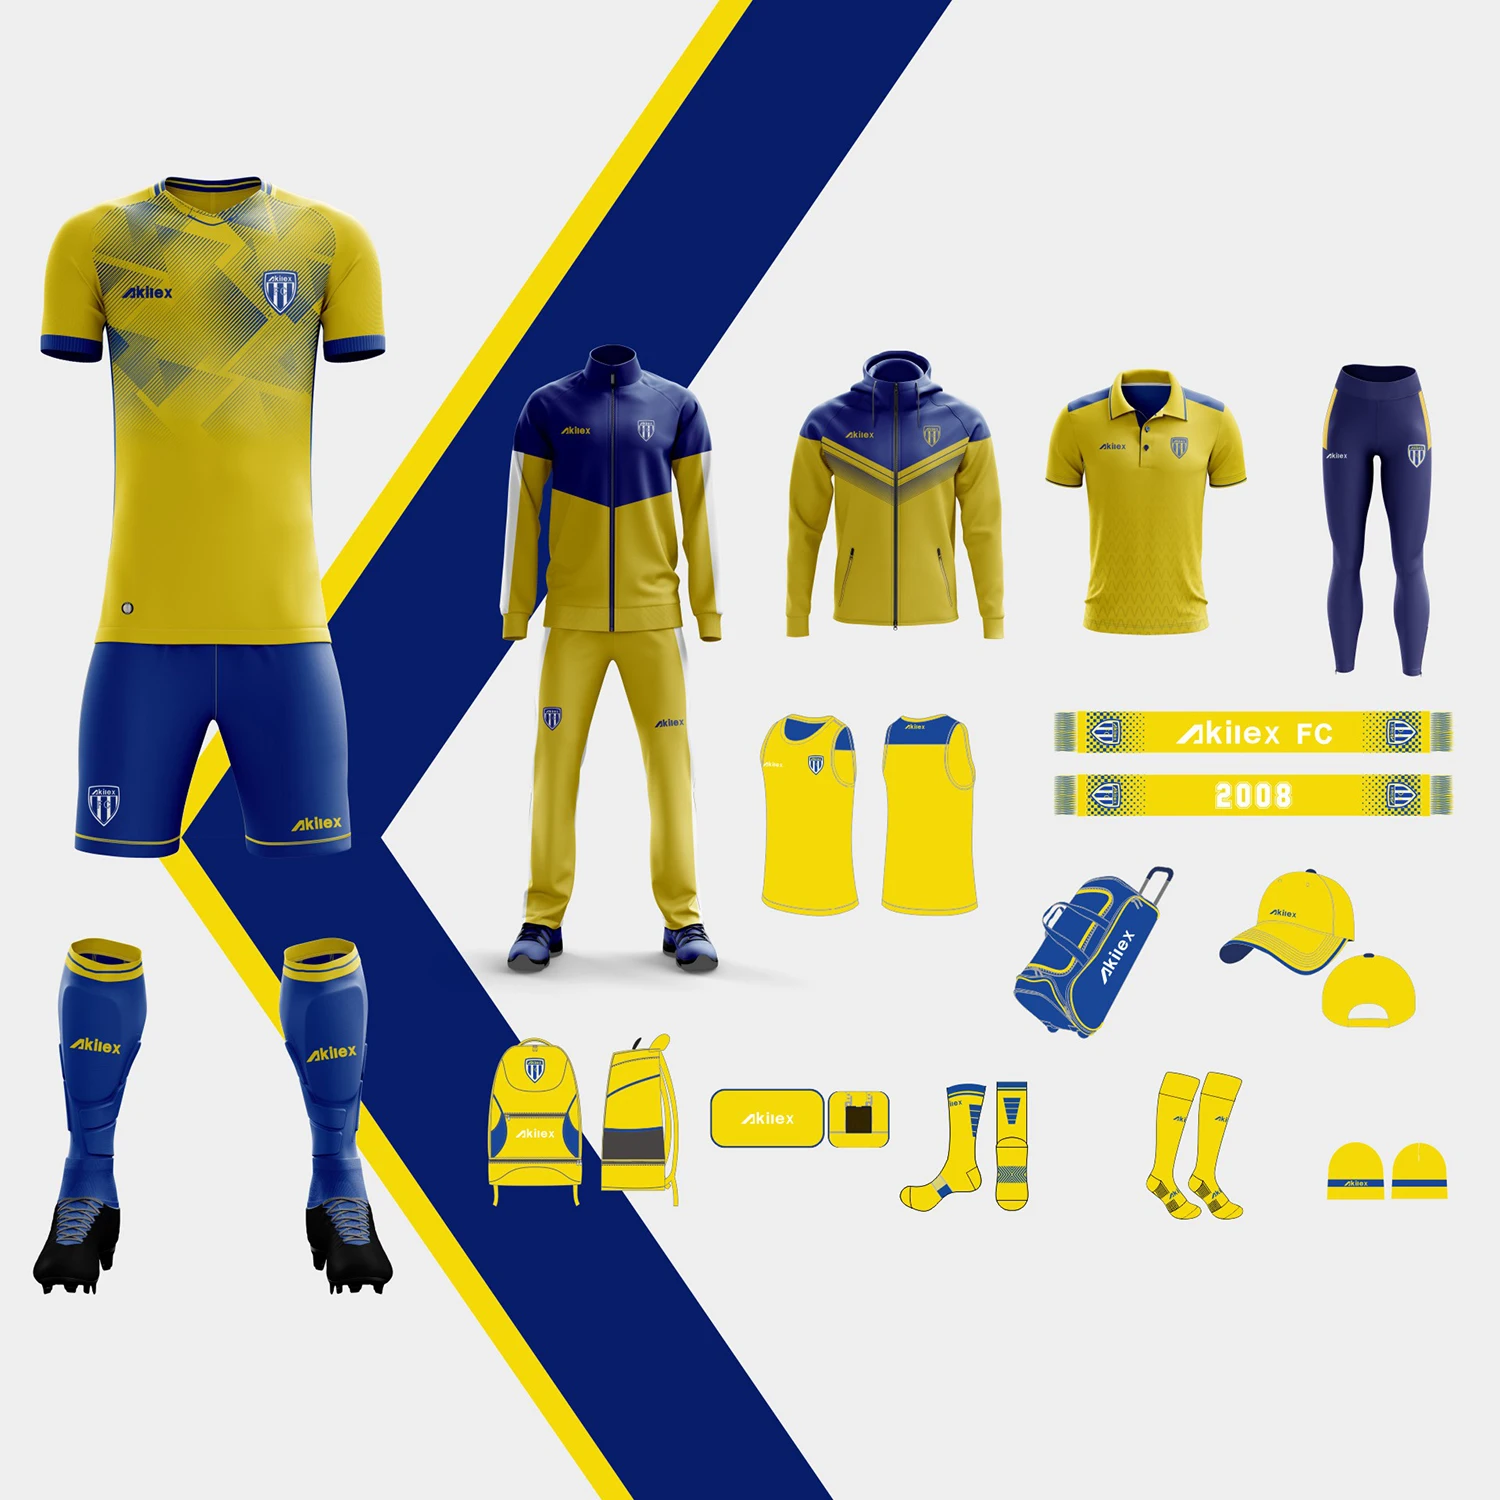 unique Jersey Football Online latest design